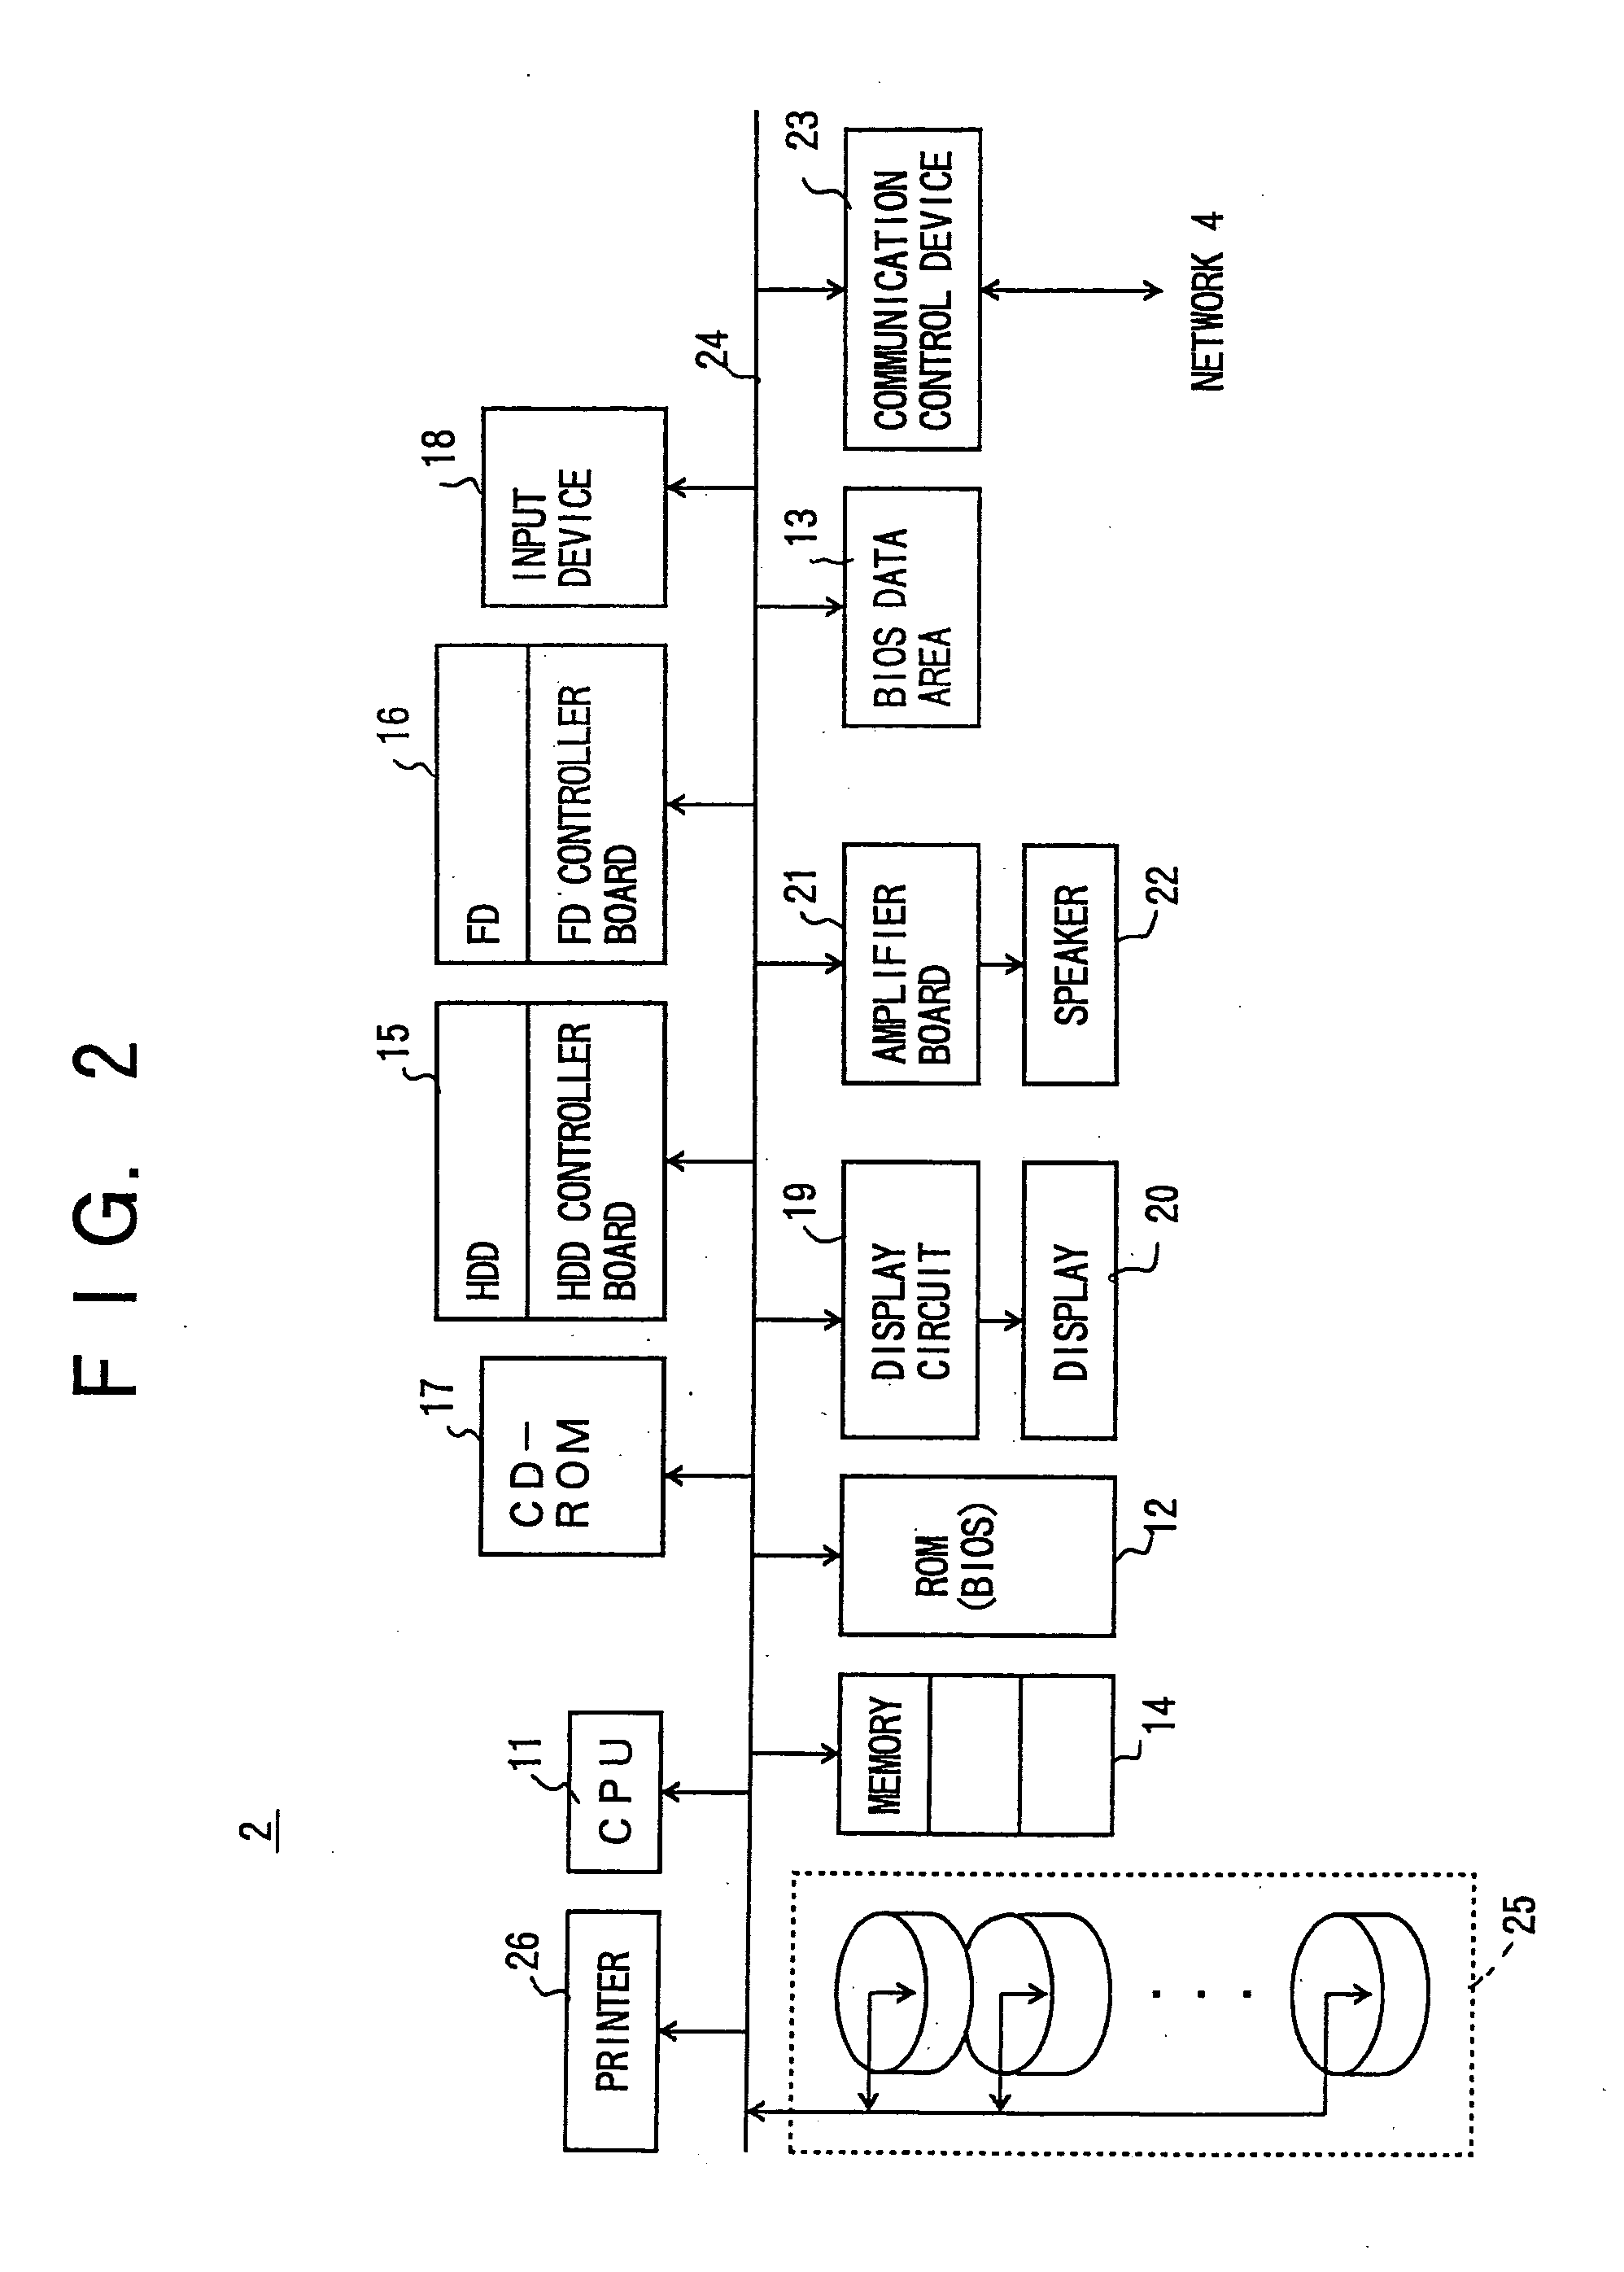 Power control of remote apparatus via network